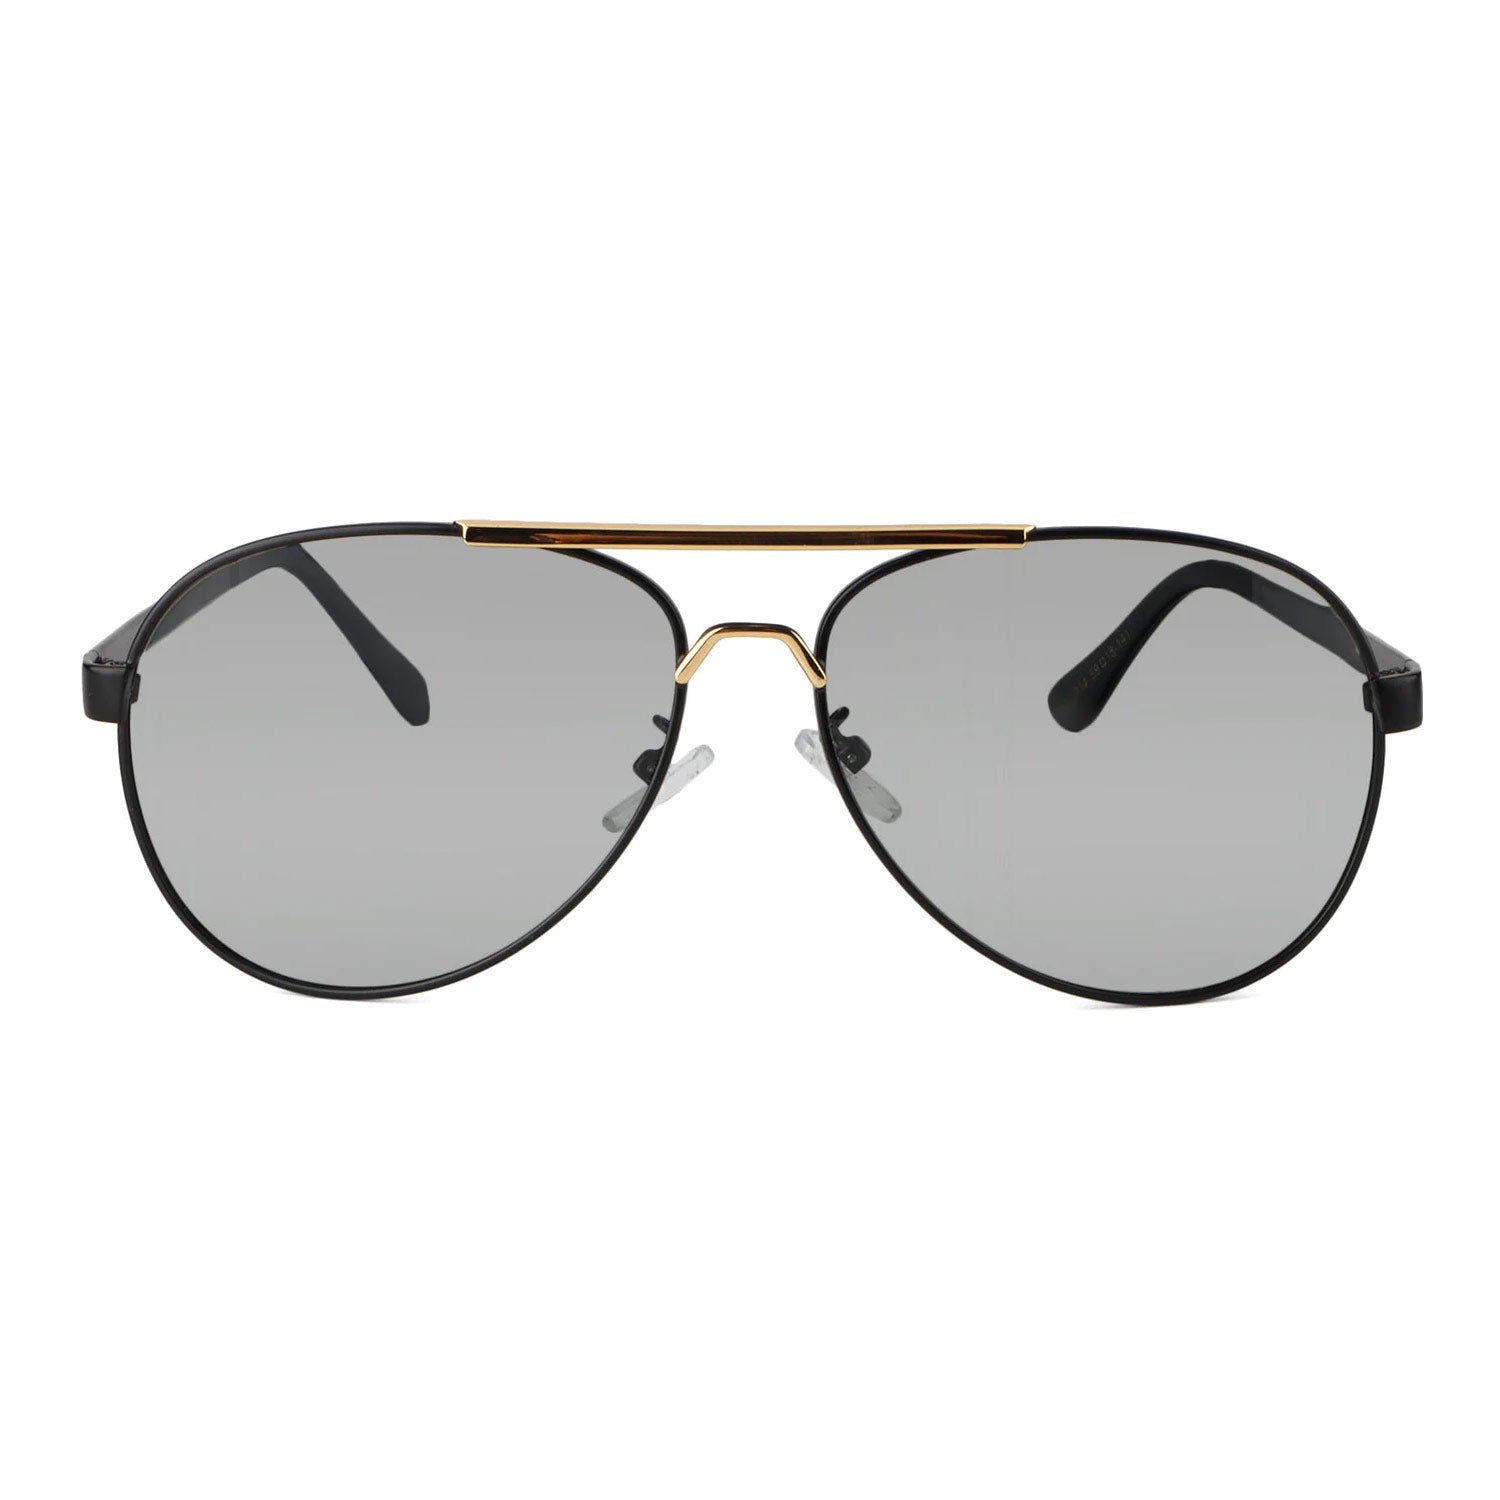 Herman - Sunglasses | ELKLOOK